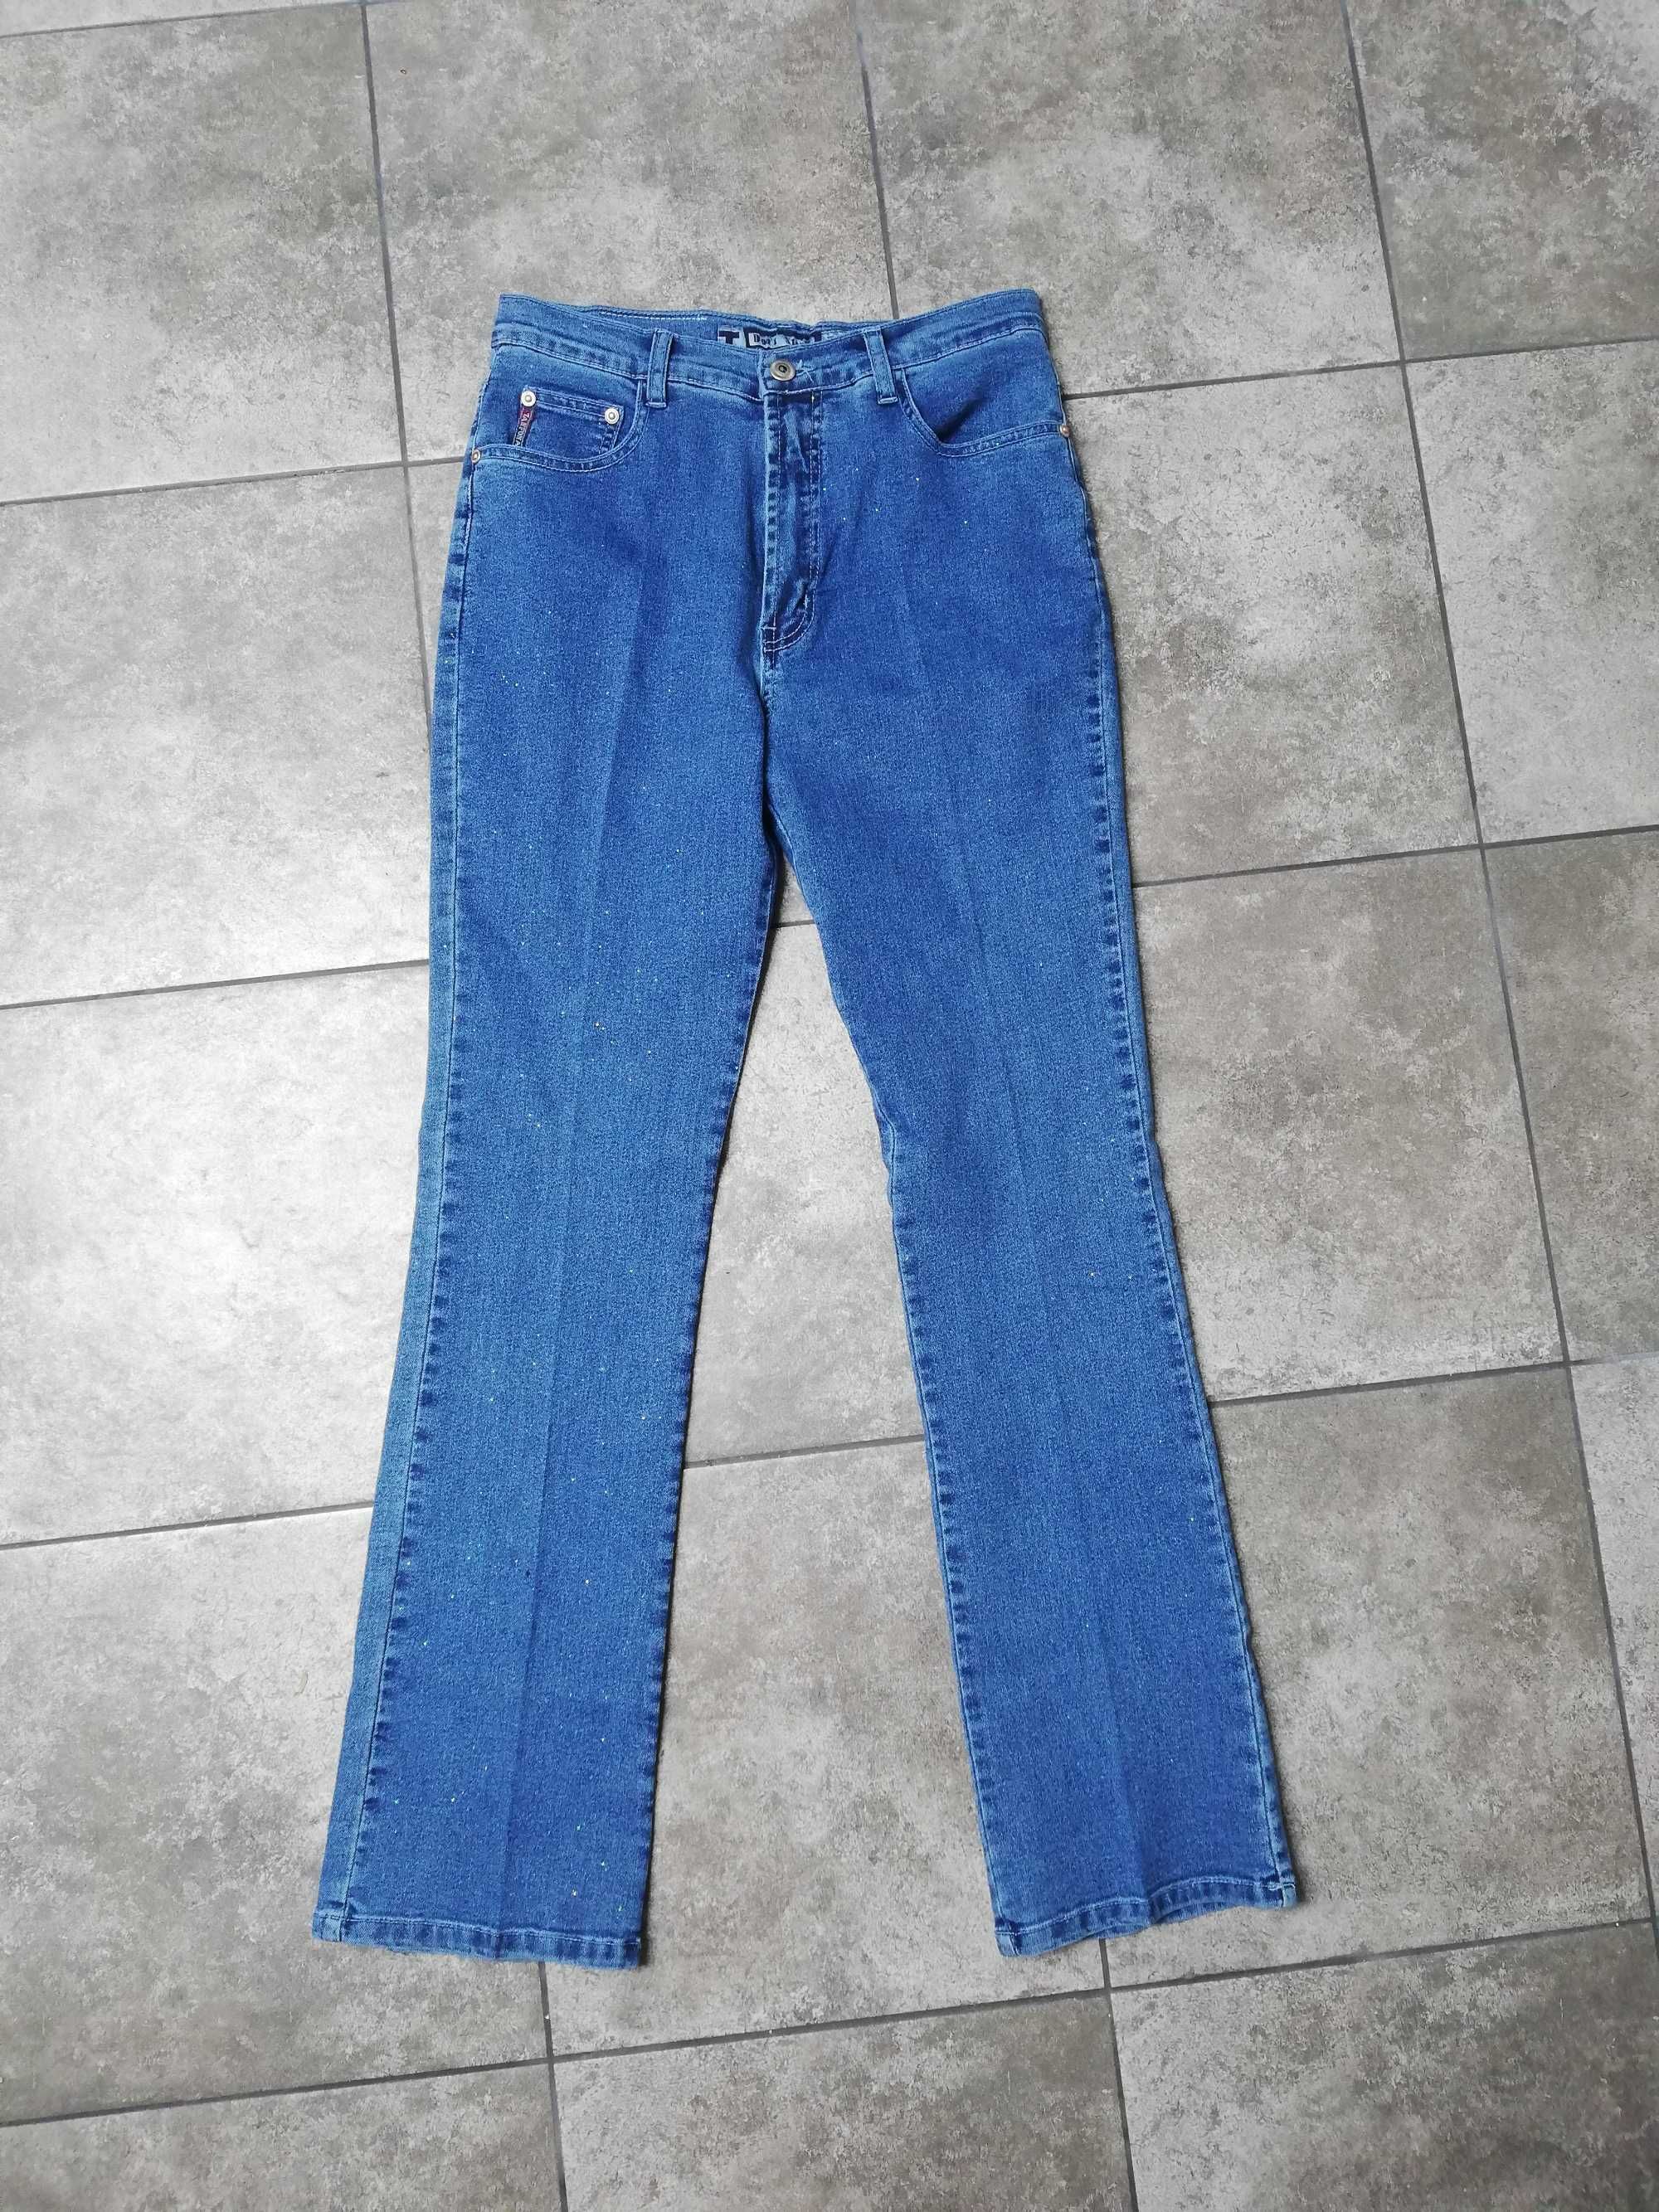 Jeansy brokatowe vintage Y2k 38-40 rozmiar M L